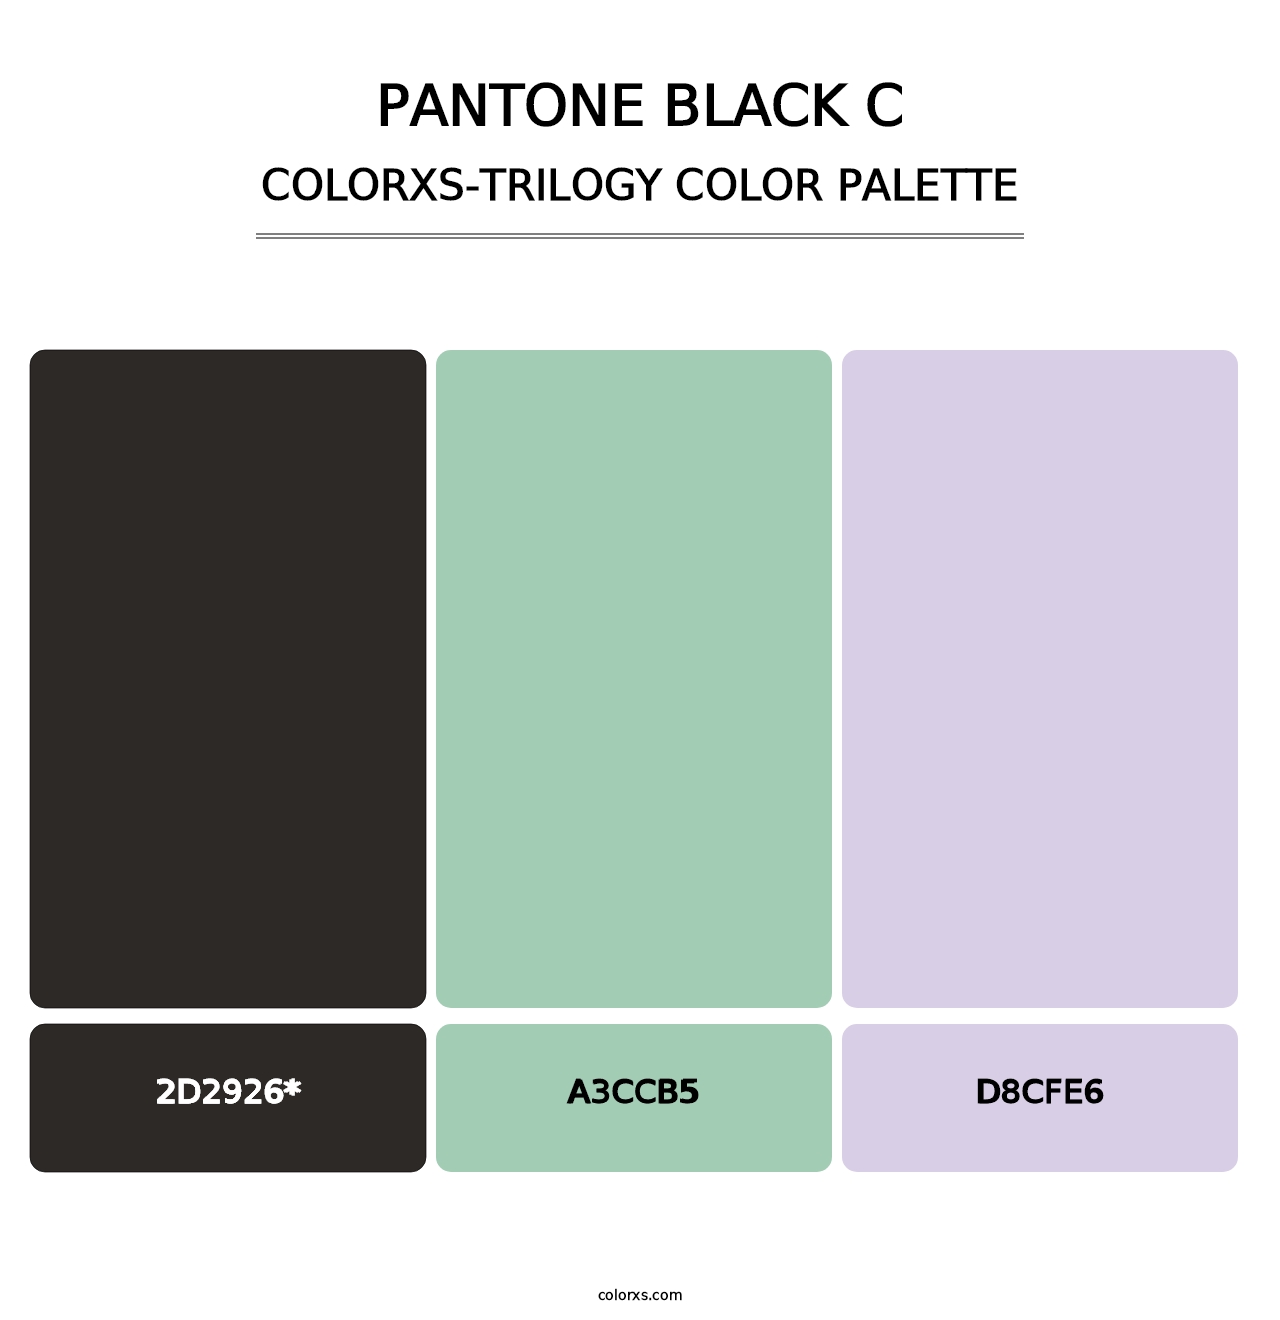 PANTONE Black C - Colorxs Trilogy Palette